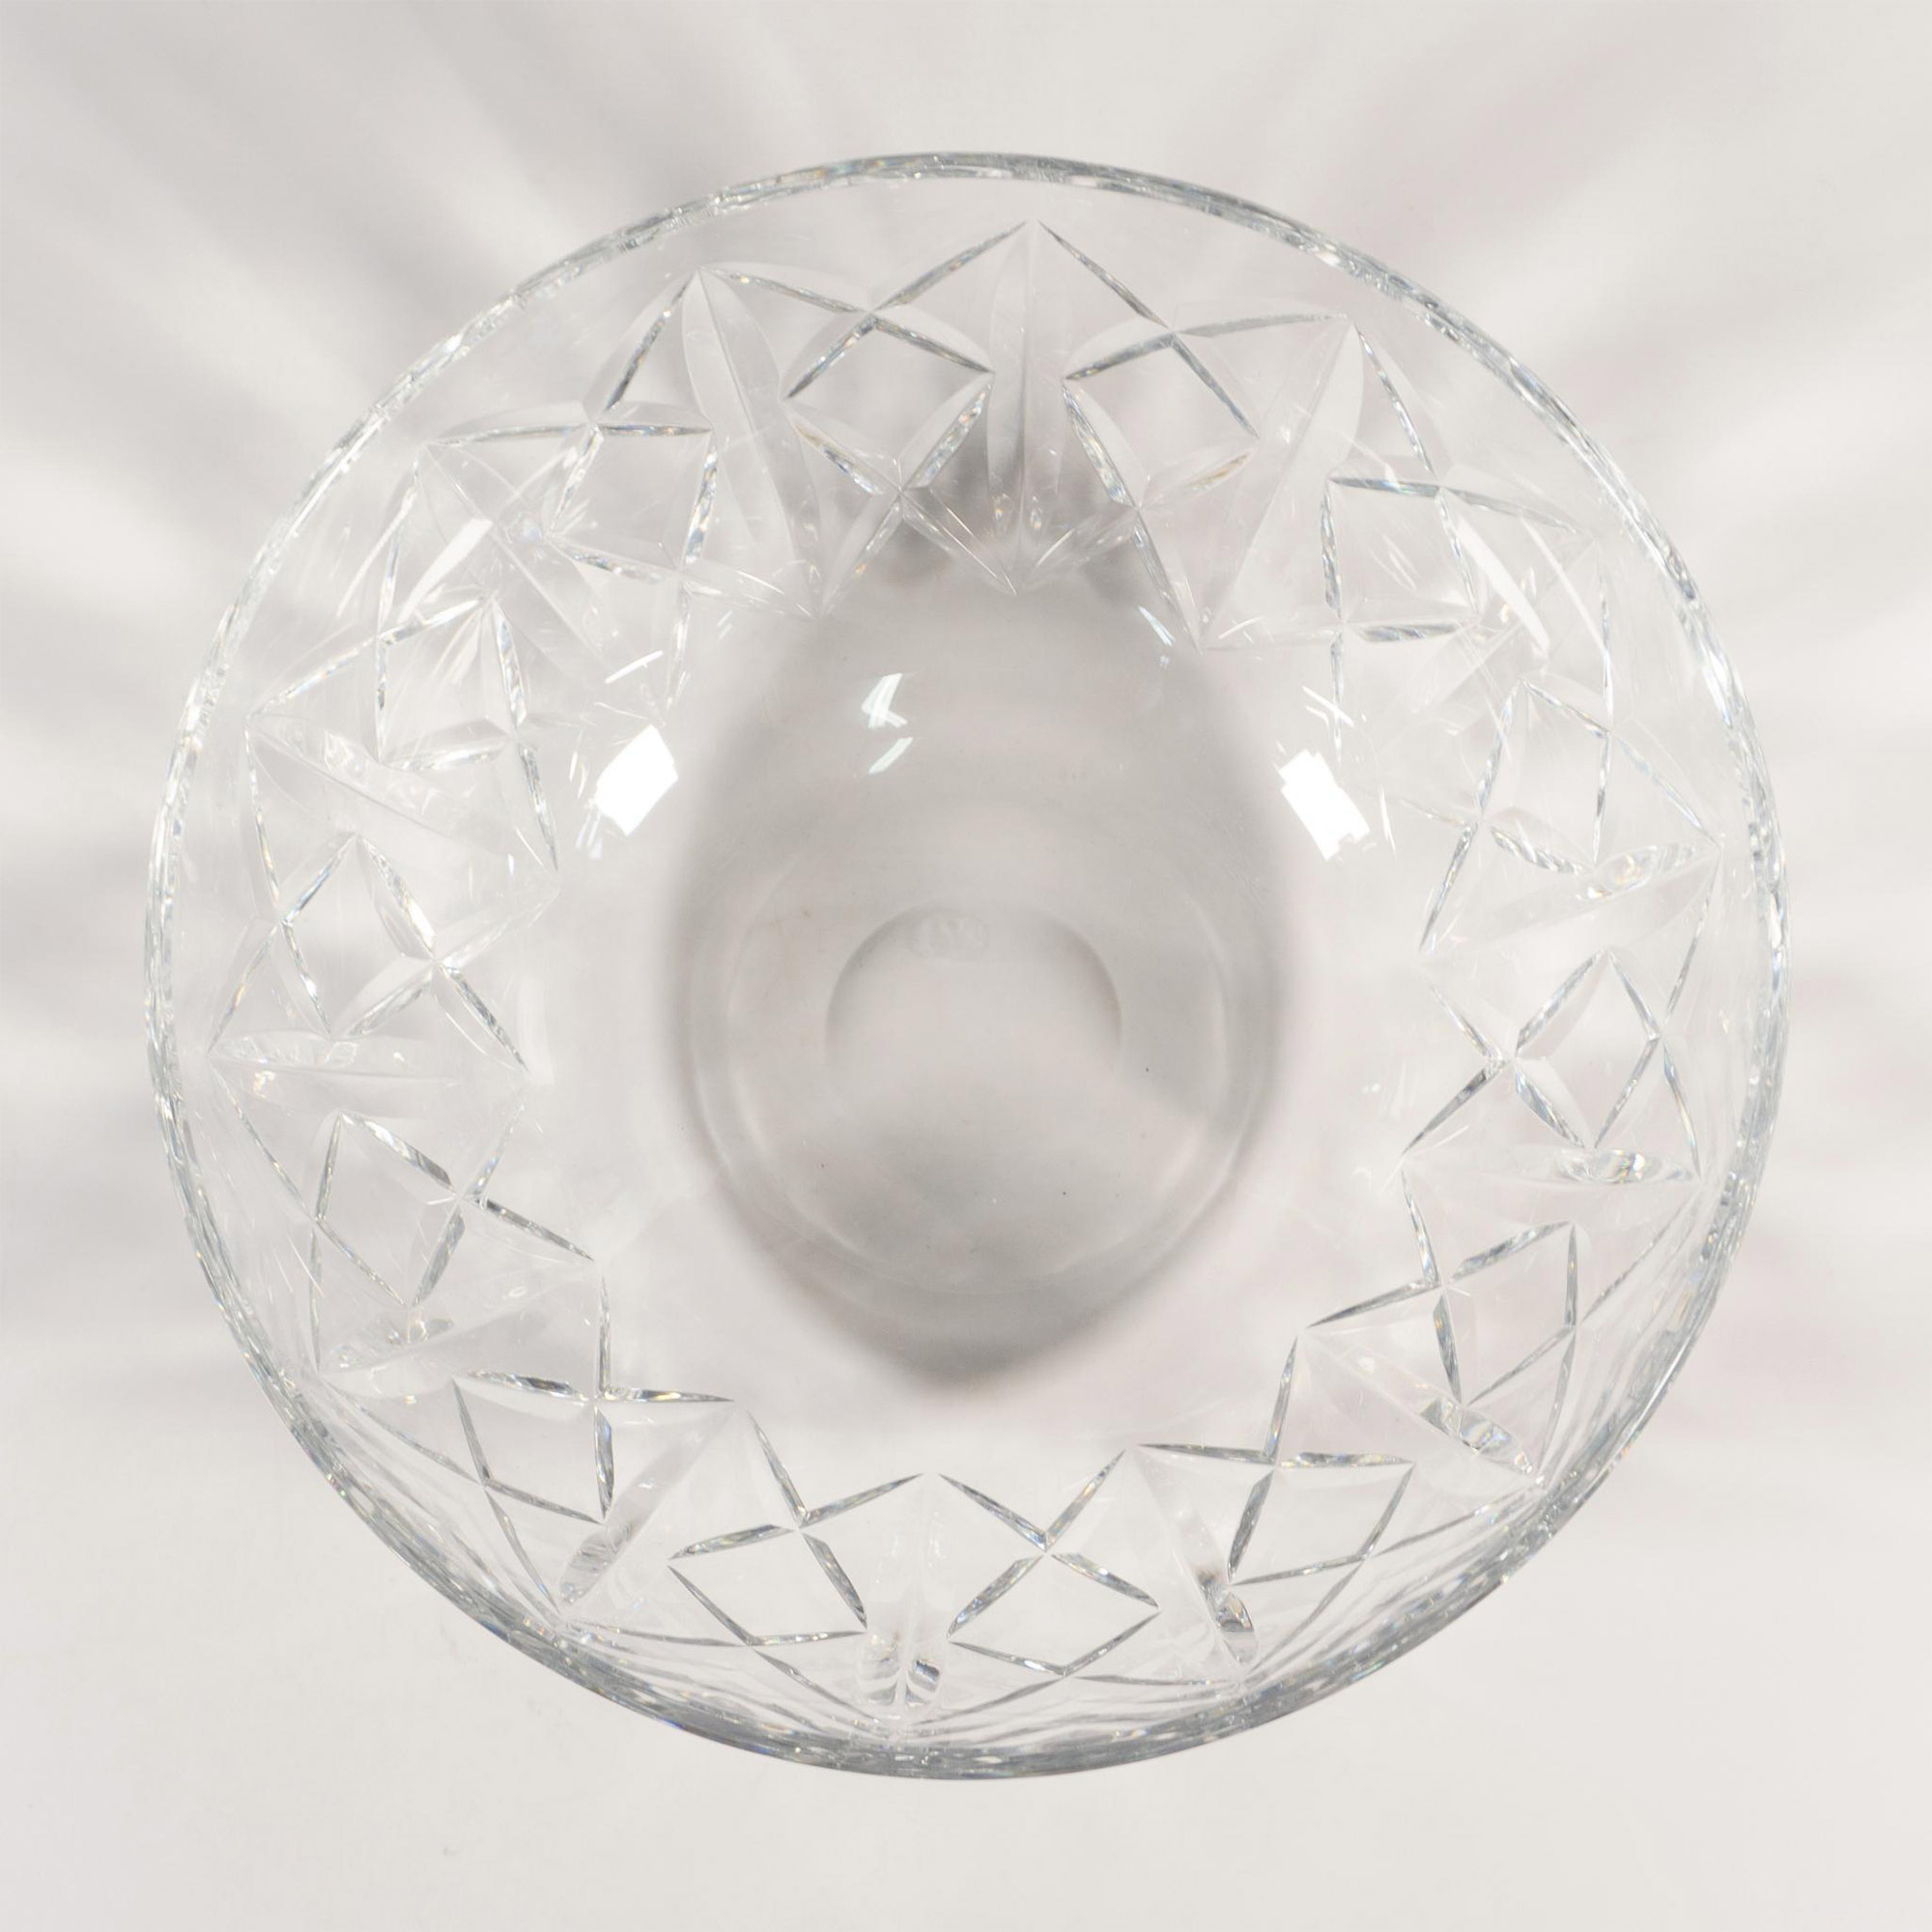 Baccarat Crystal Bowl - Image 2 of 3